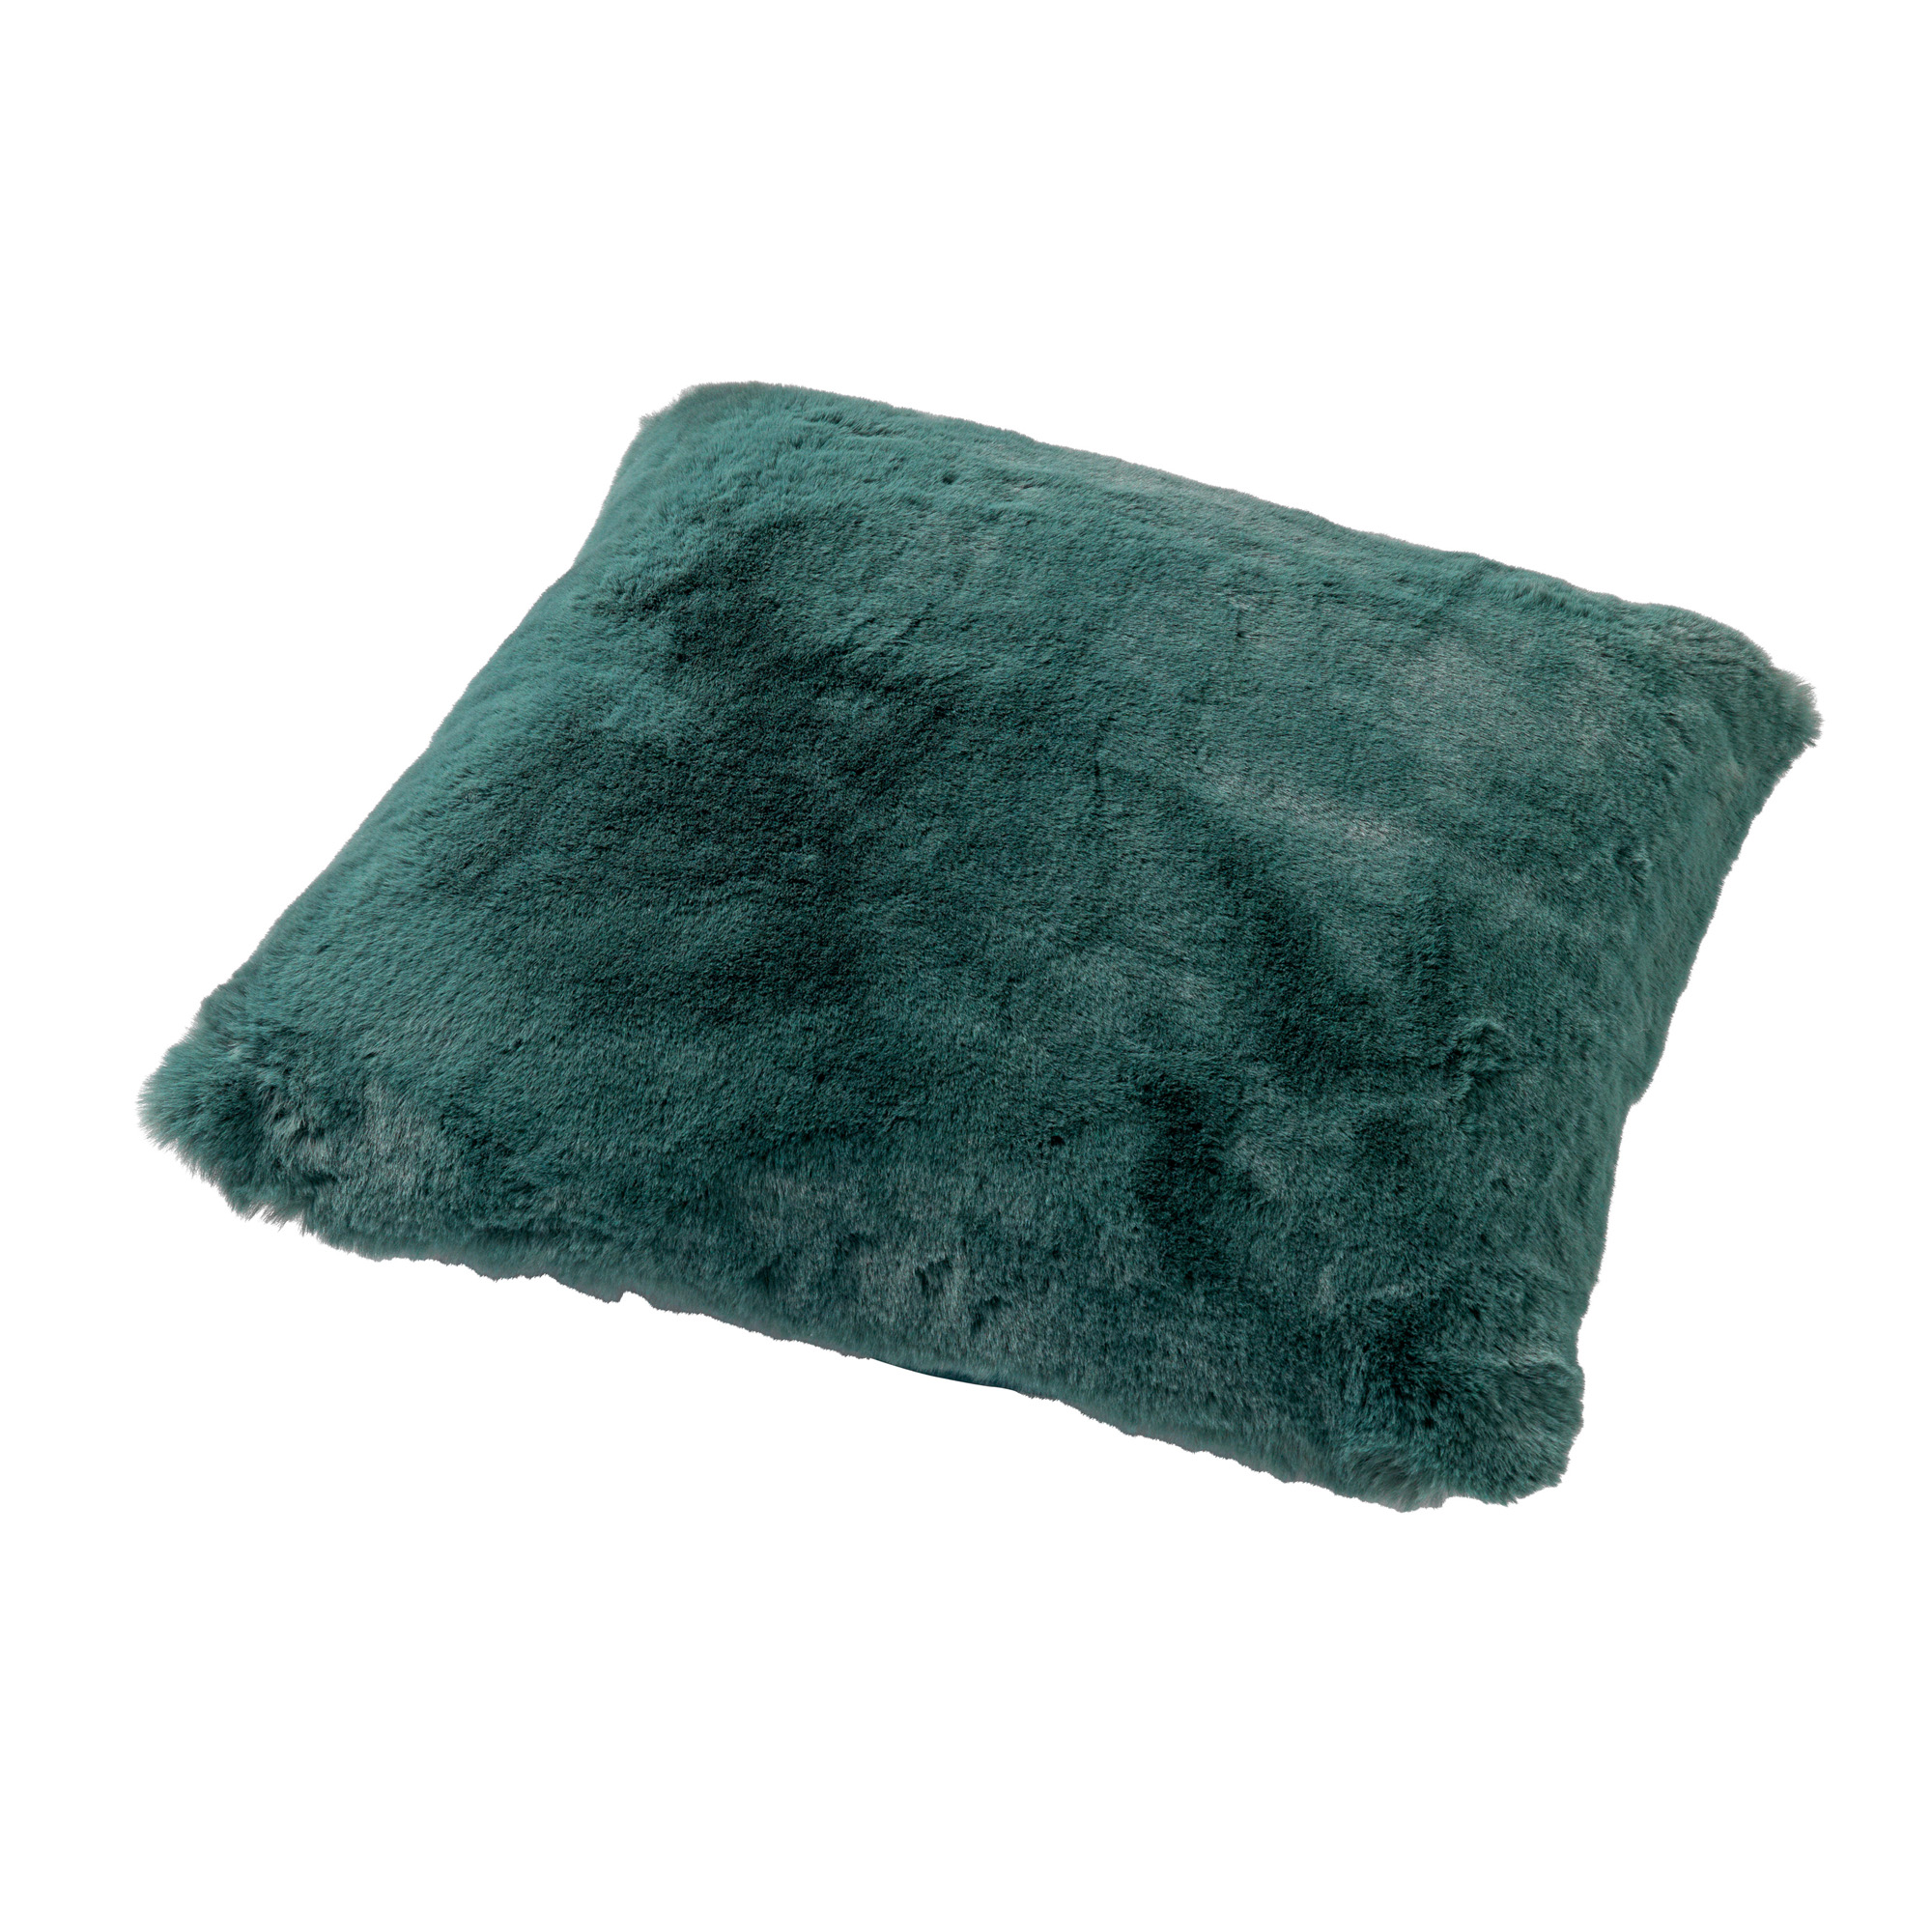 ZAYA - Kussenhoes unikleur 45x45 cm - Sagebrush Green - groen - superzacht